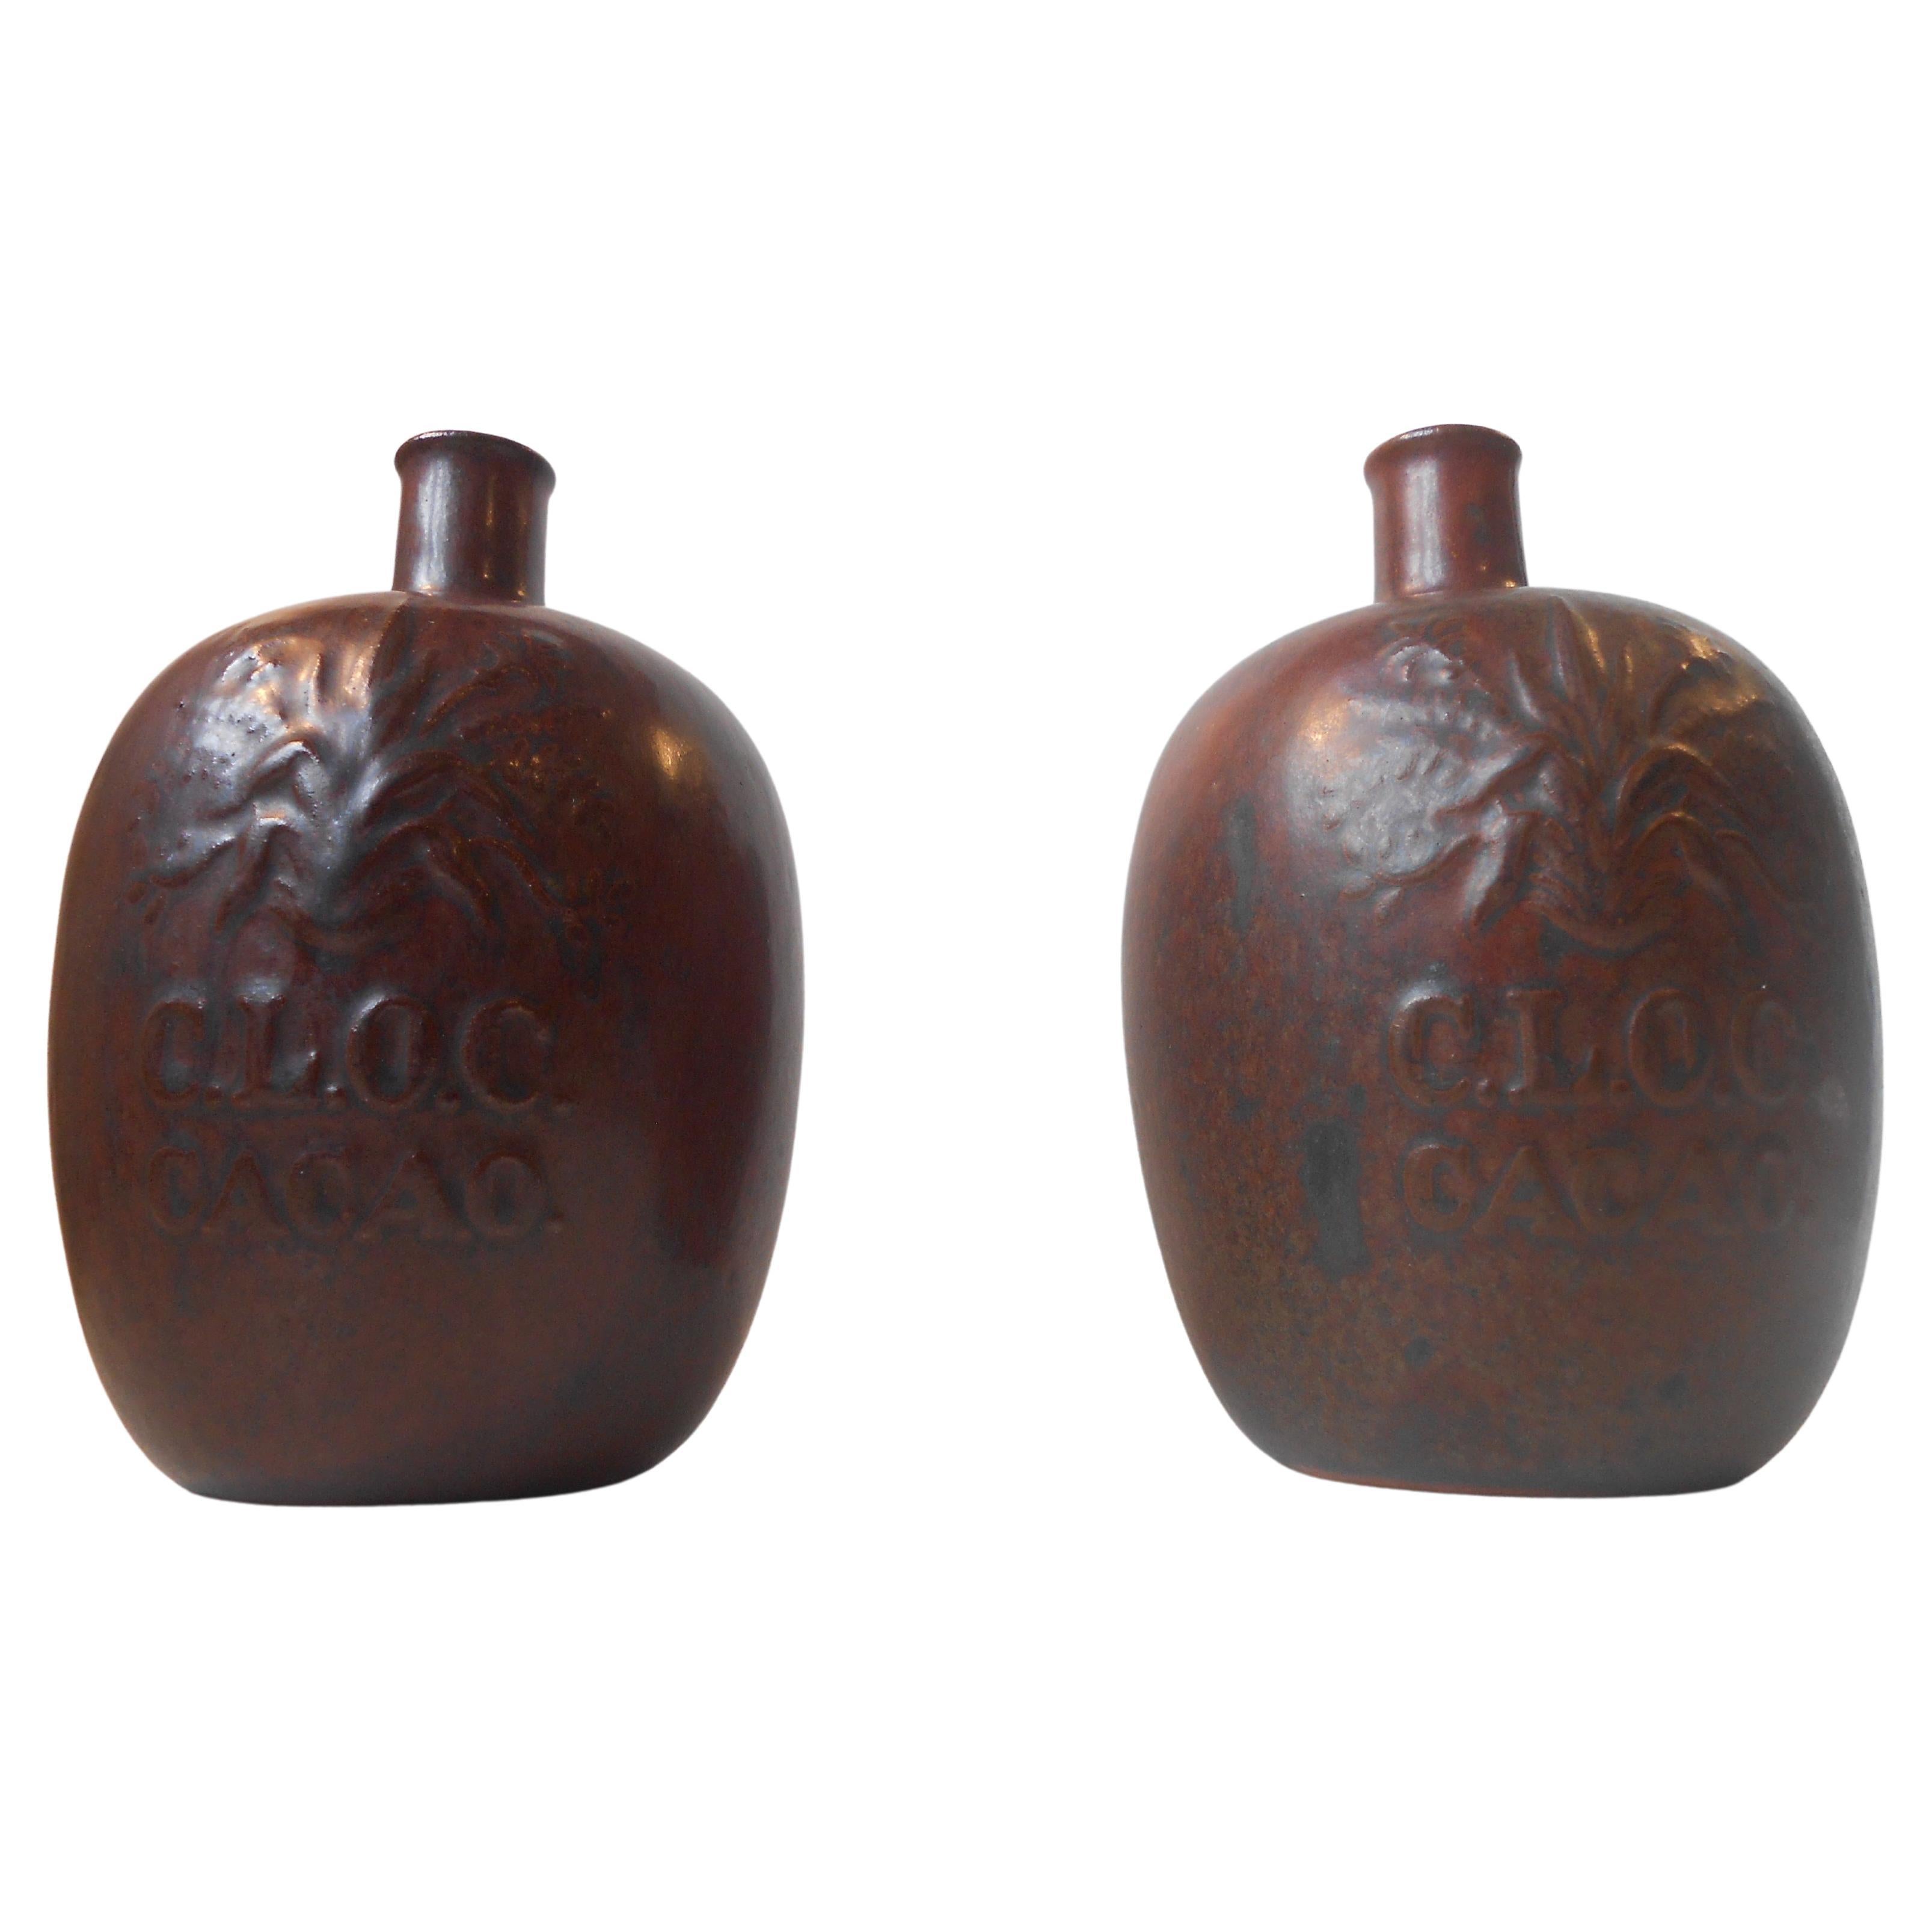 Arne Bang Glazed Stoneware Bottle Vases, 1930s For Sale